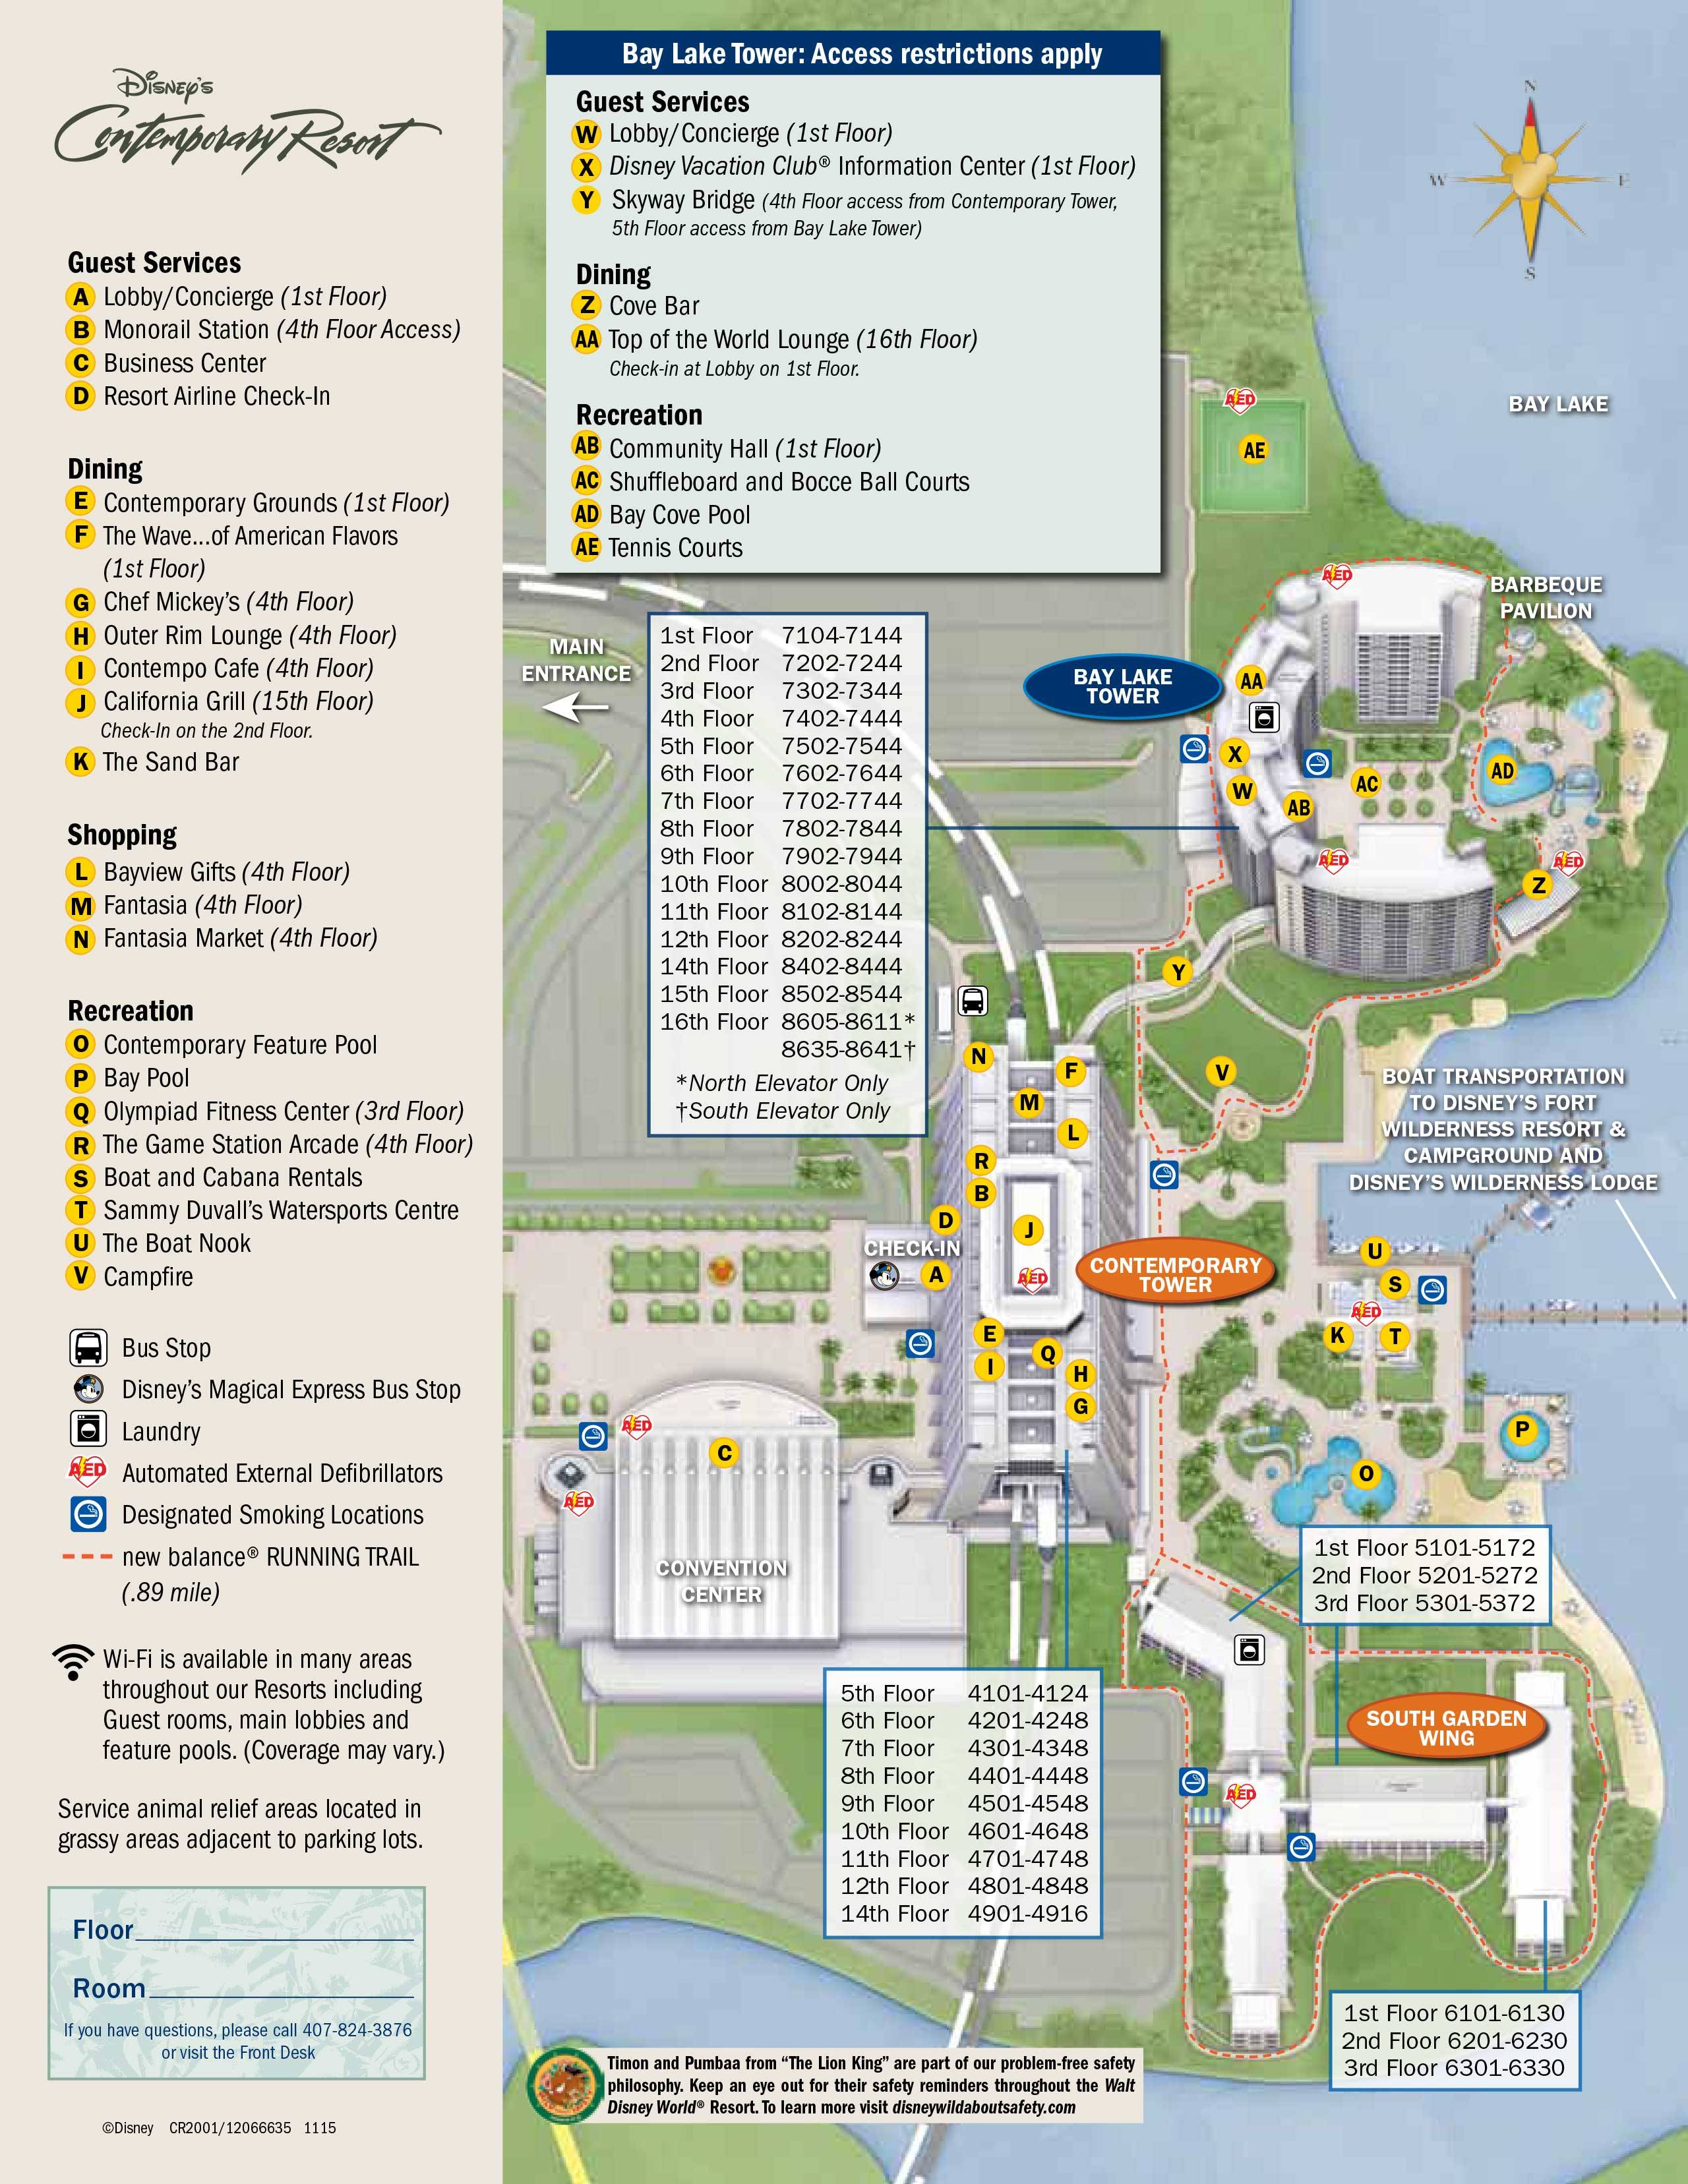 Disney's Contemporary Resort map